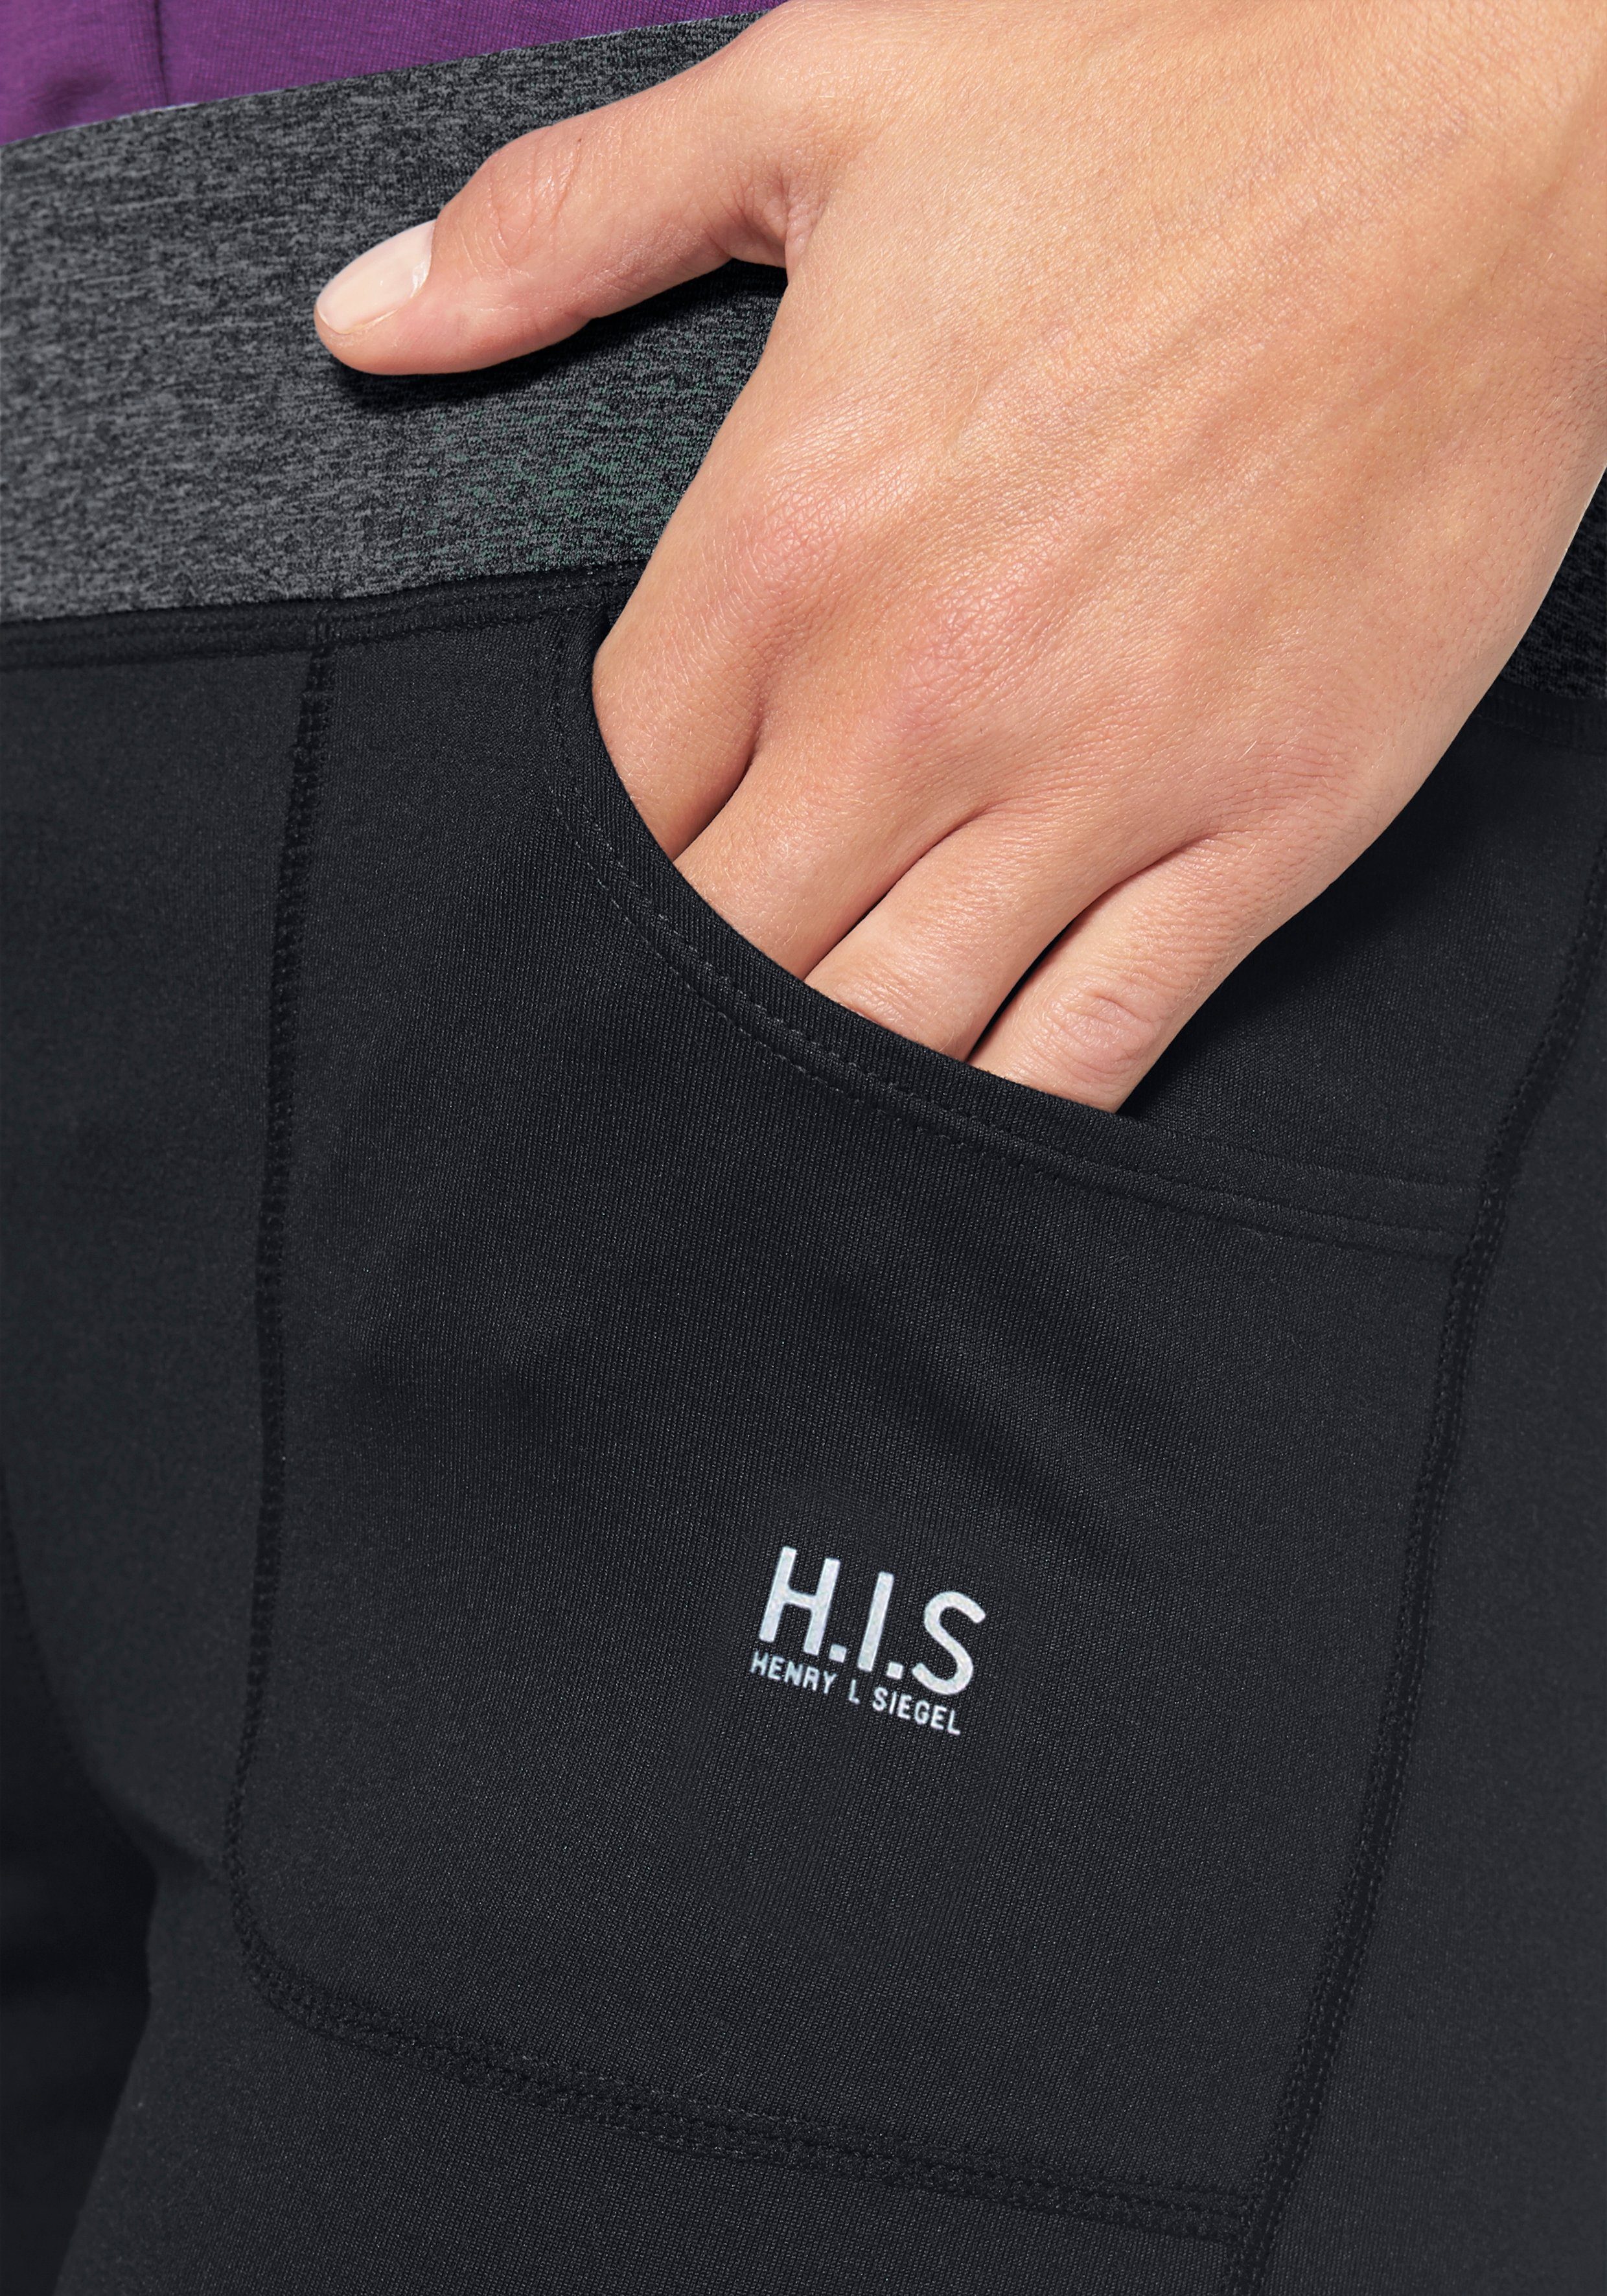 H.I.S mit Material aus aus Wickeloptik nachhaltigem K+L recyceltem (Hose Jazzpants schwarz Bund Material)